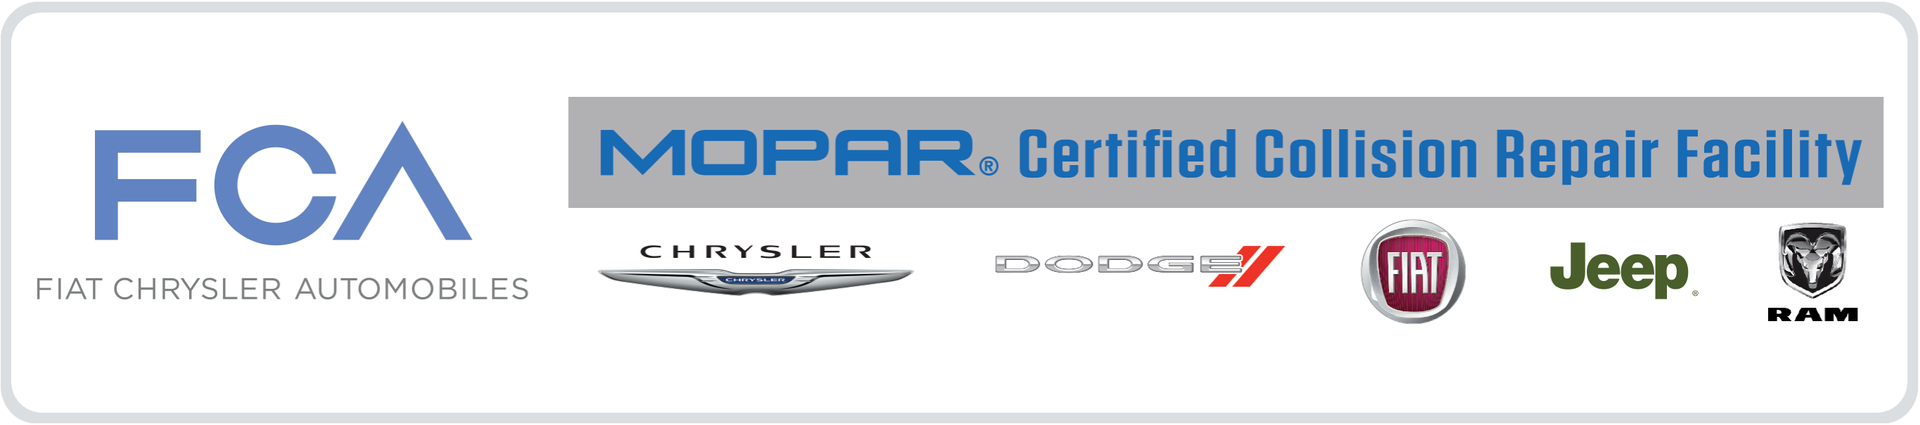 A logo for the fca mopar certified collision repair facility